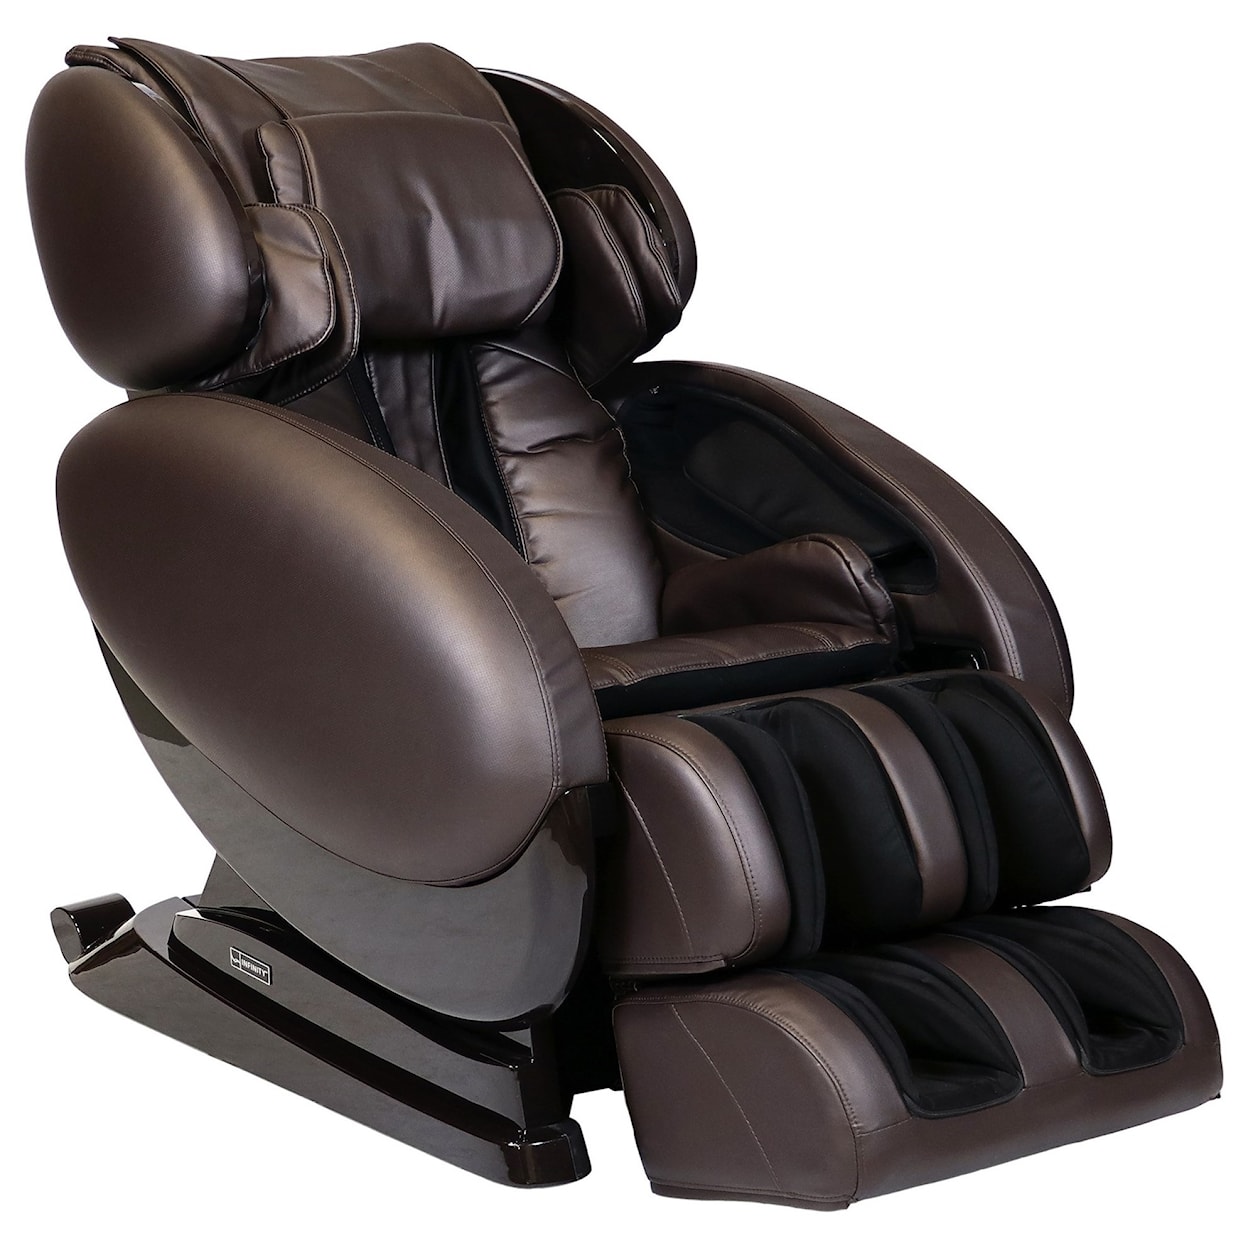 Infinity IT-8500 Plus Reclining Massage Chair